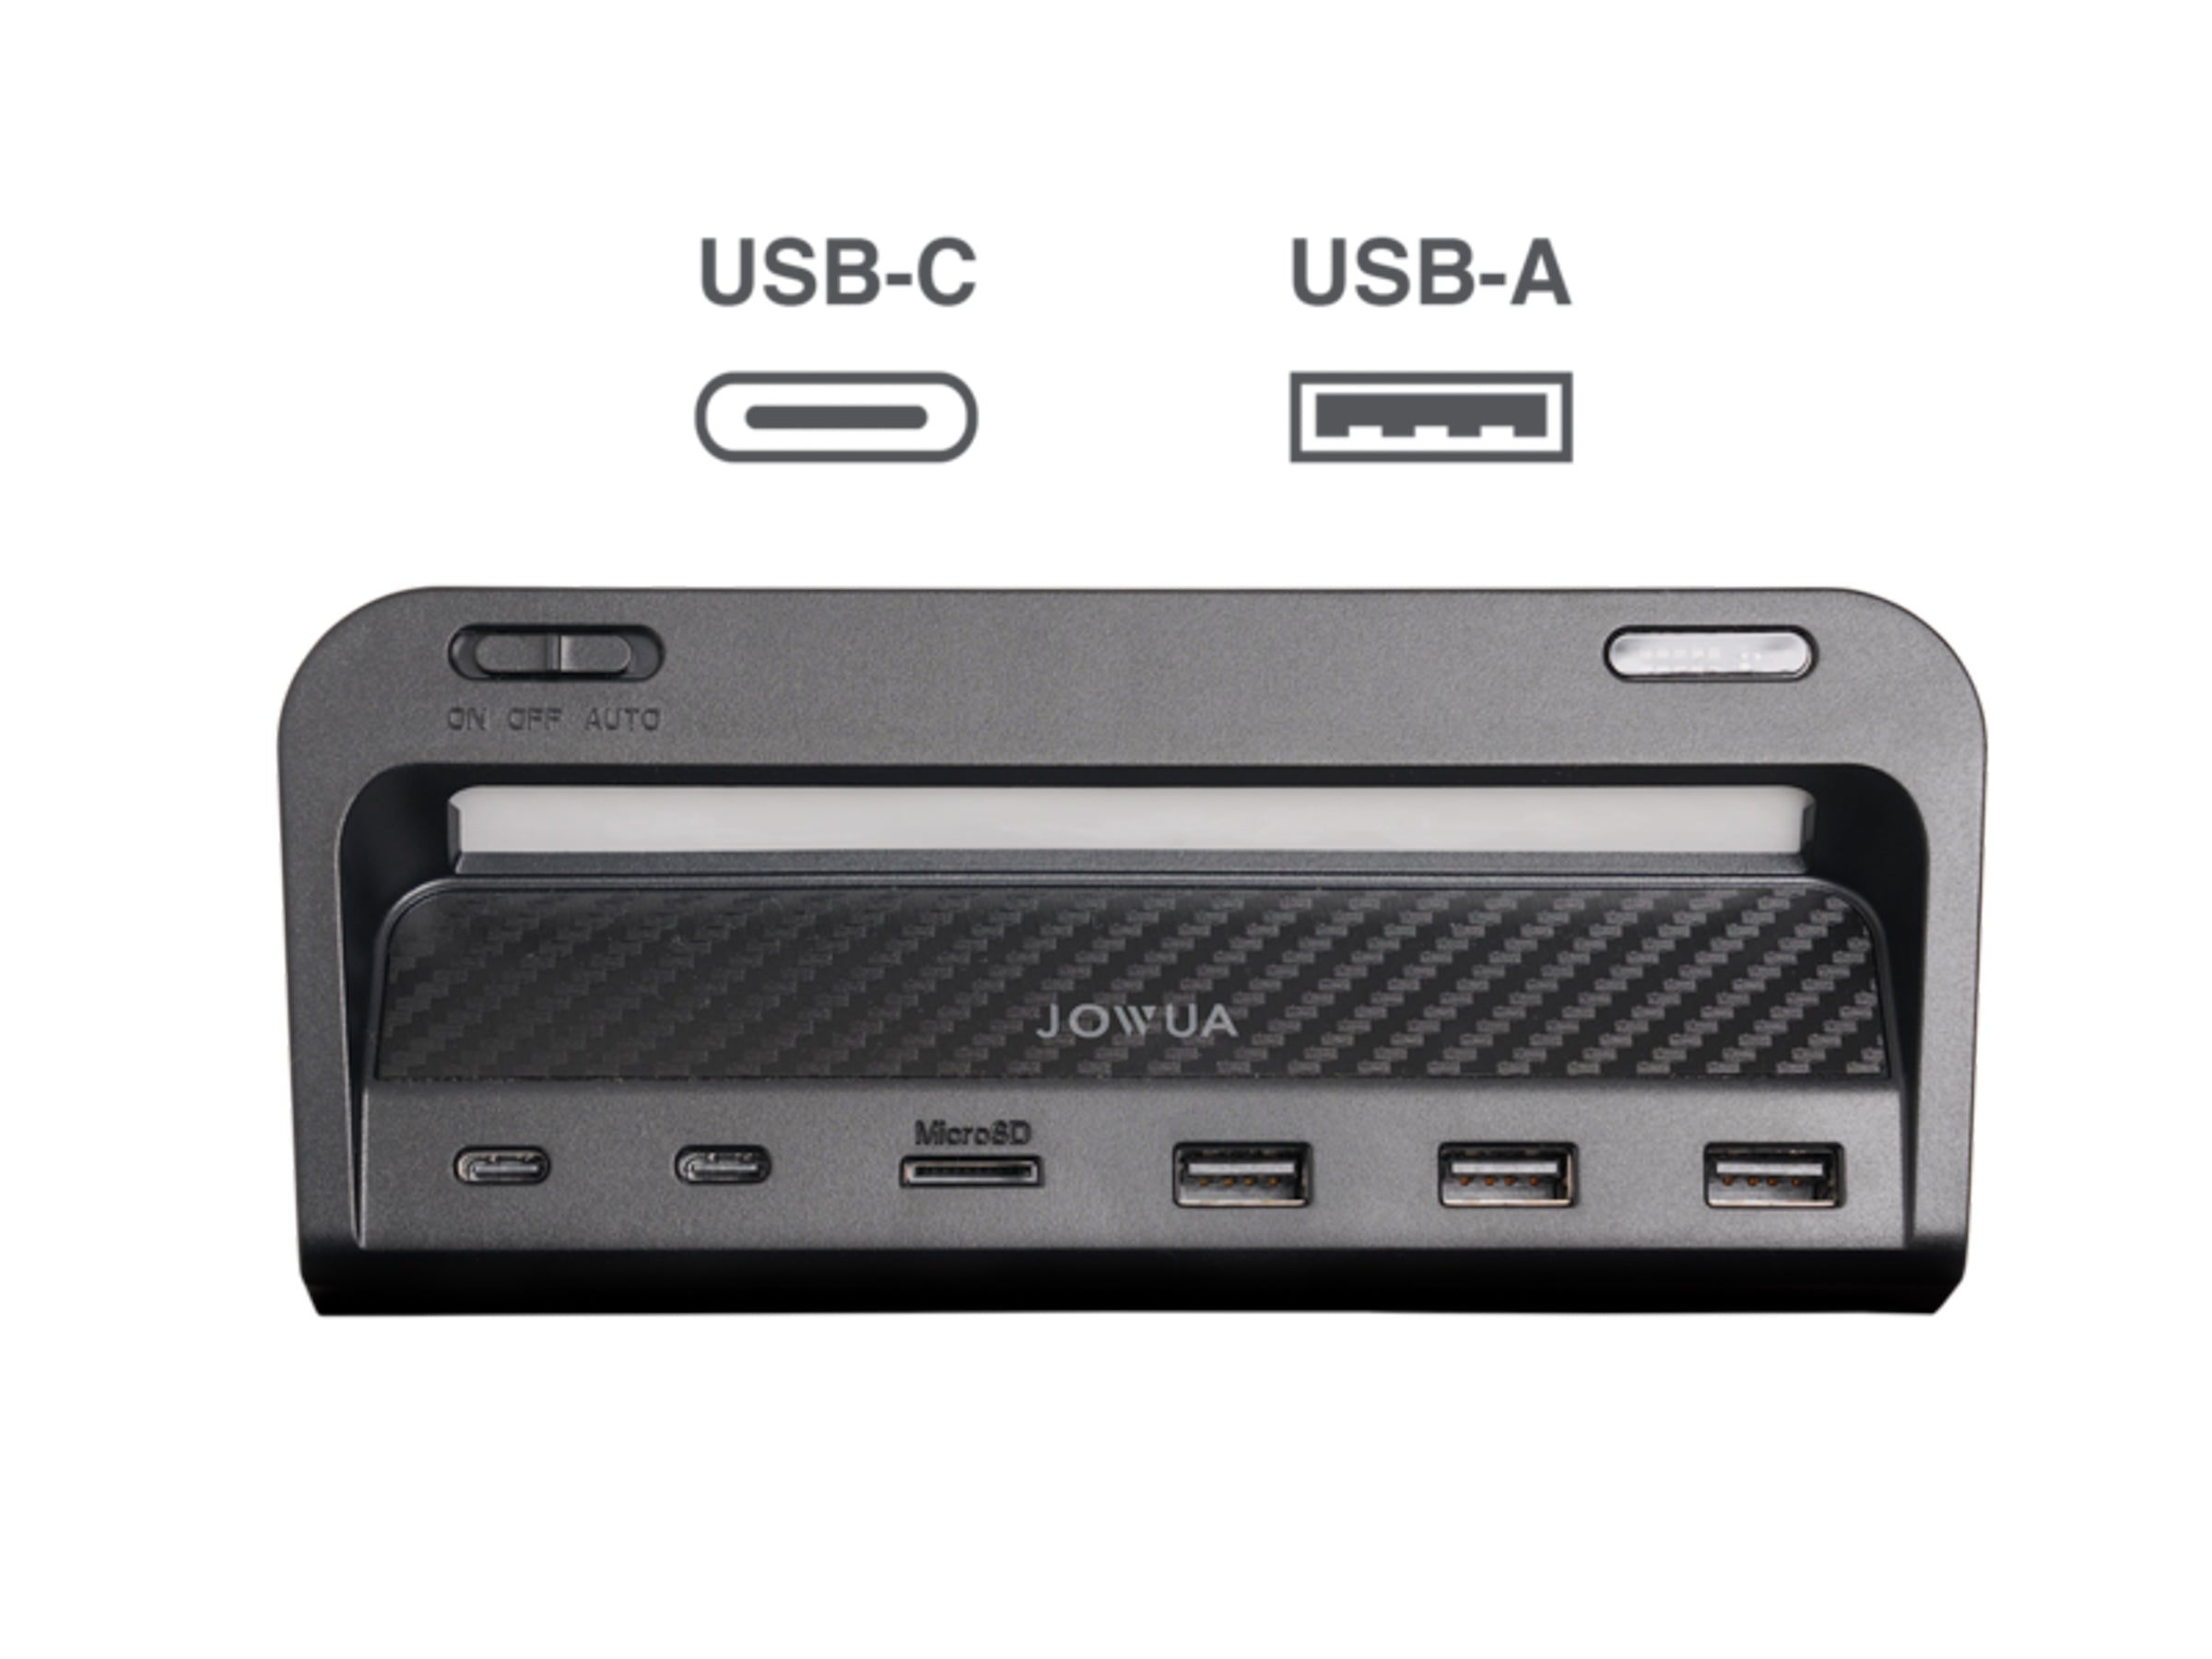 Final Sale - Tesla Model 3 USB Hub w/ LED and Micro SD slot for Sentry Mode (USB-C and USB-A)